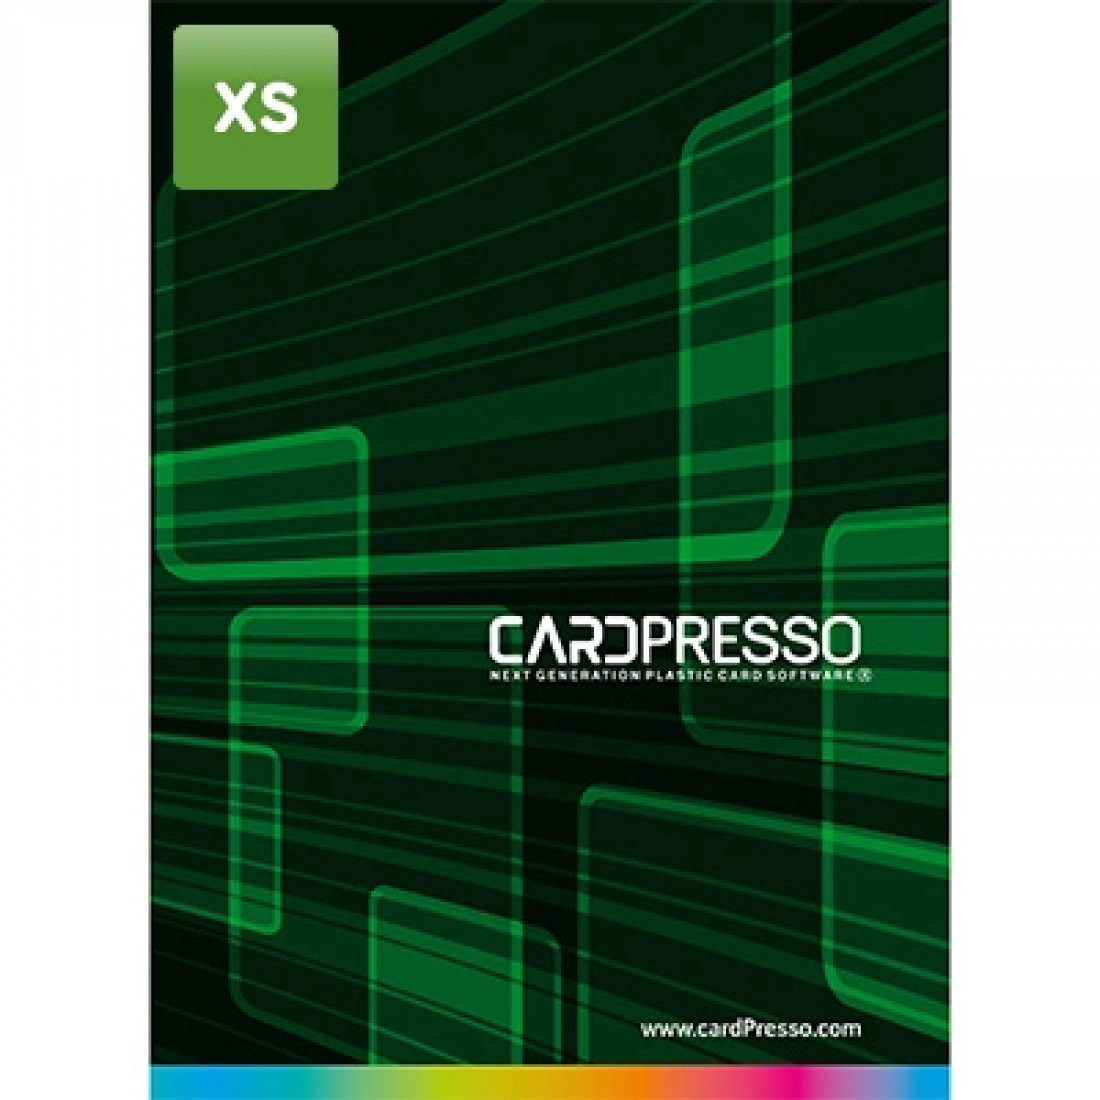 cardpresso encode from database